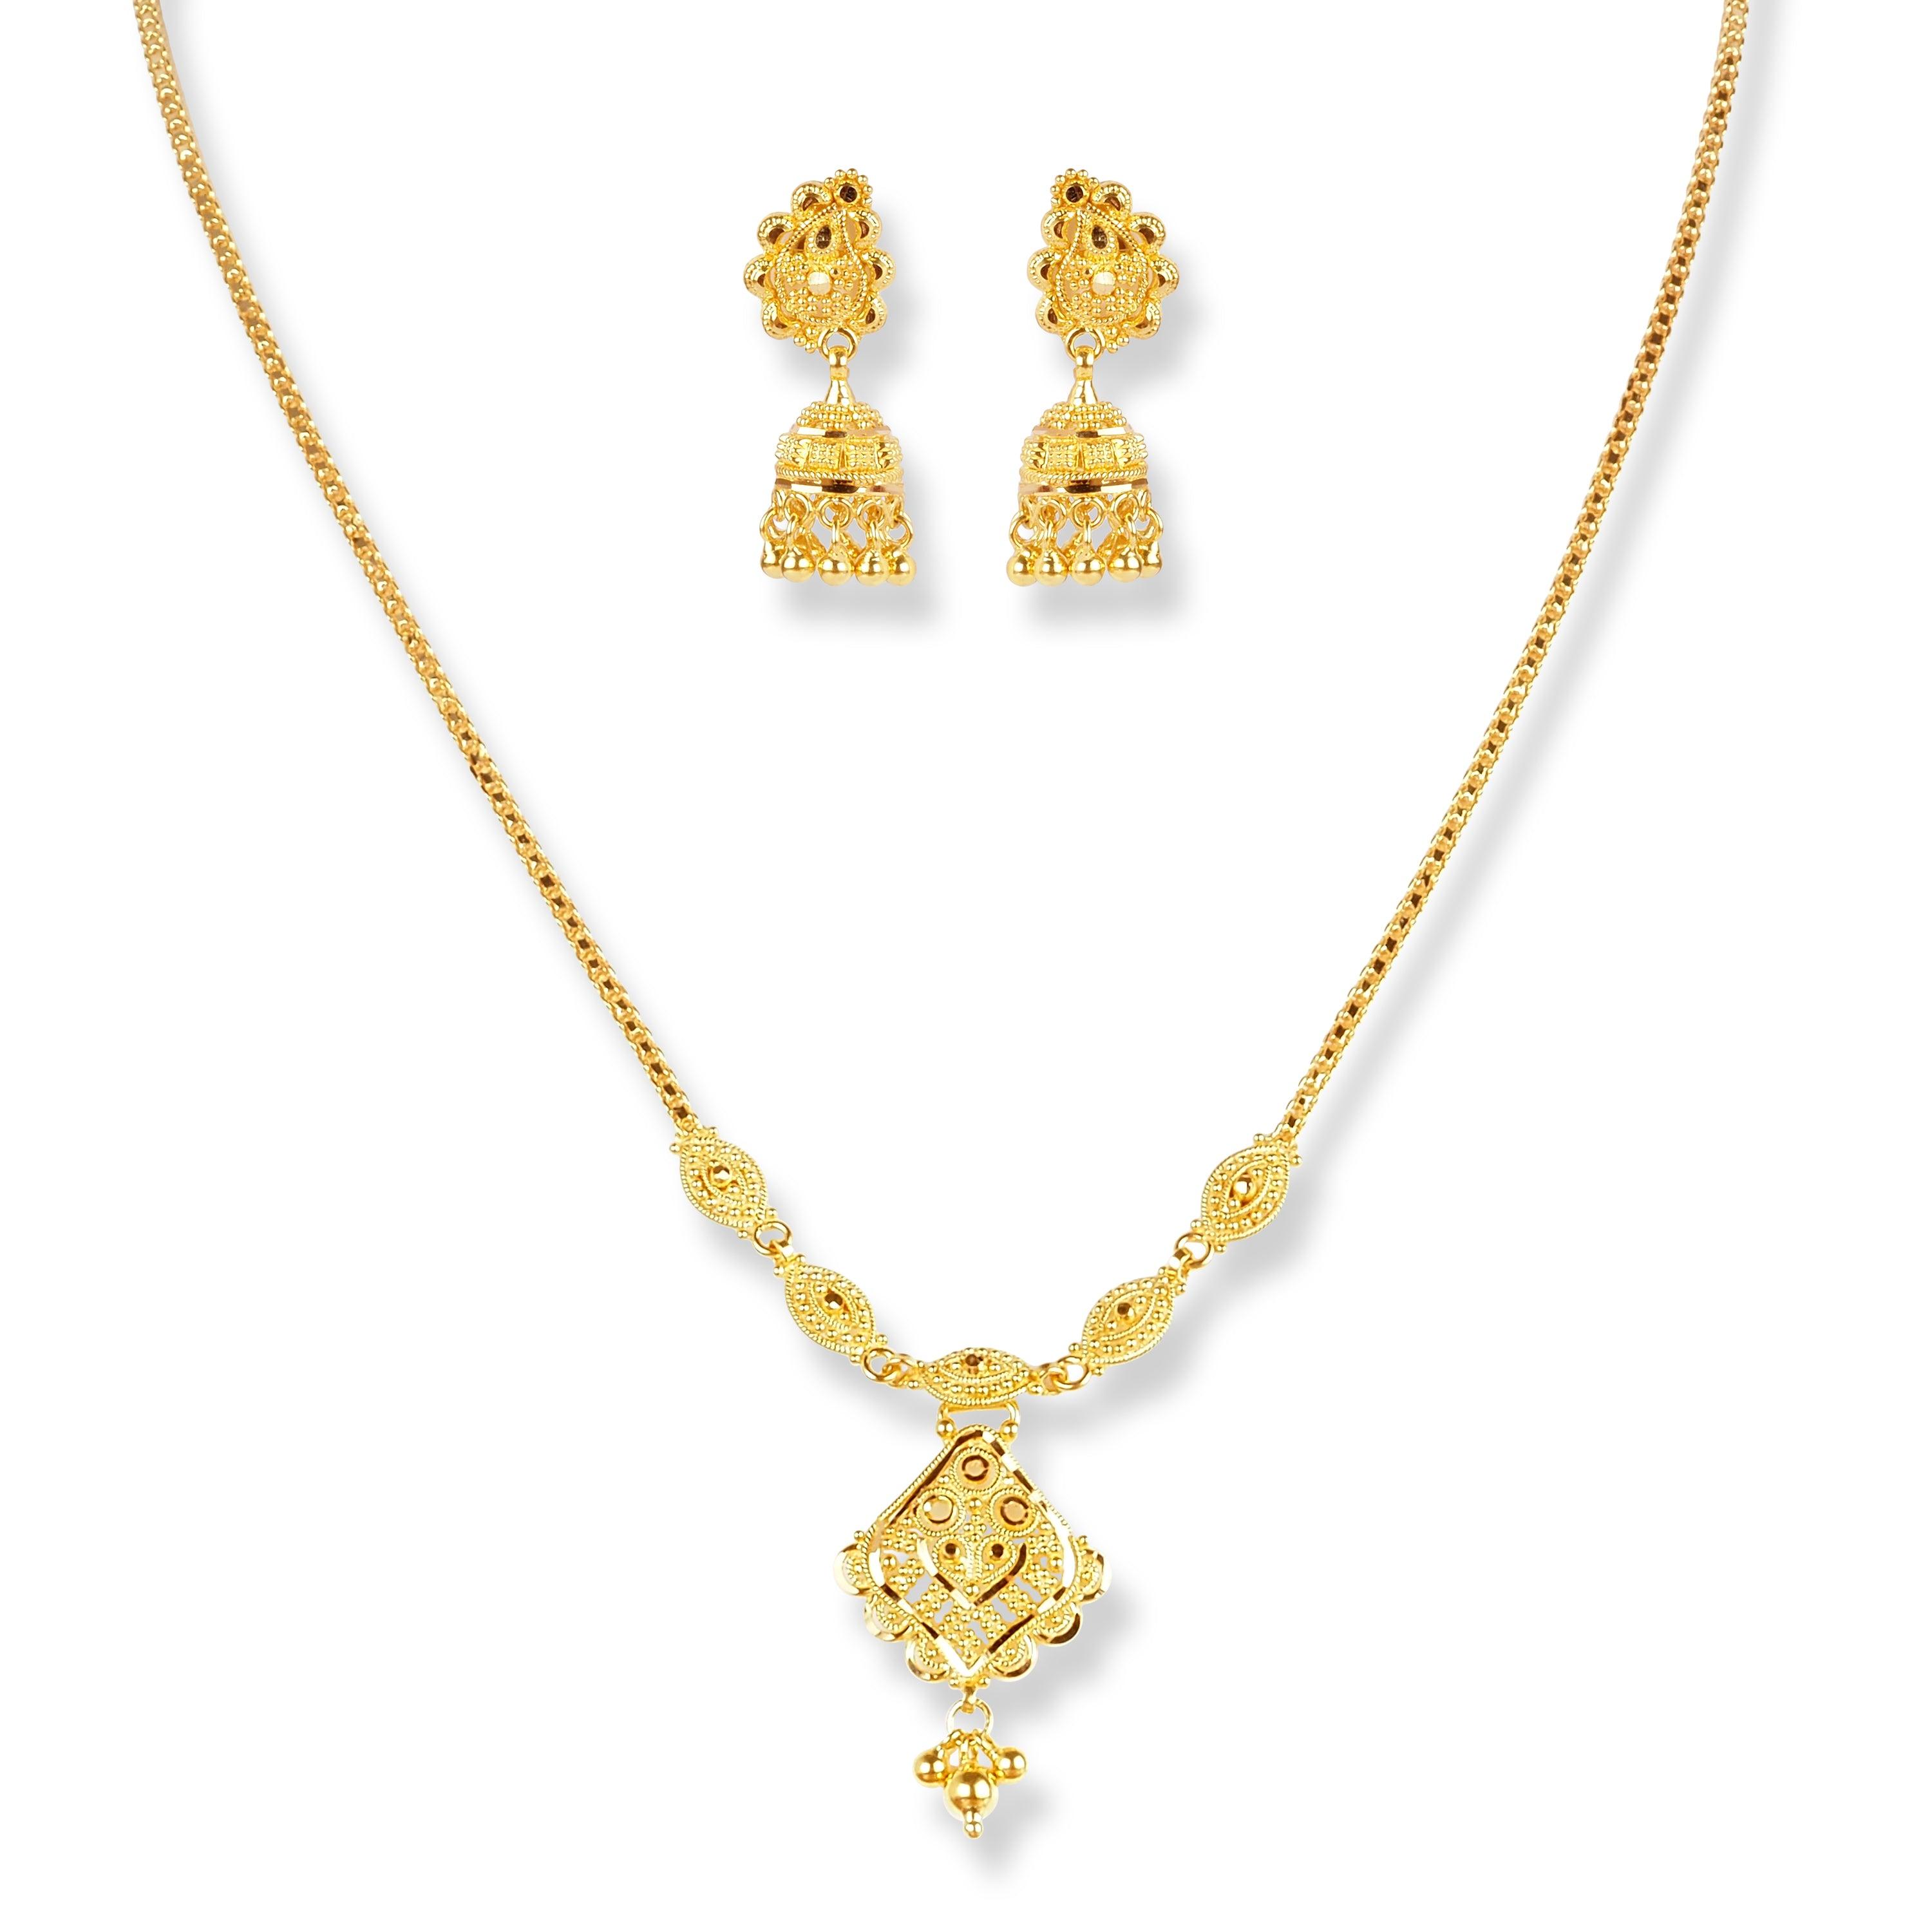 22ct Gold Set with Filigree Work N-7911 - Minar Jewellers